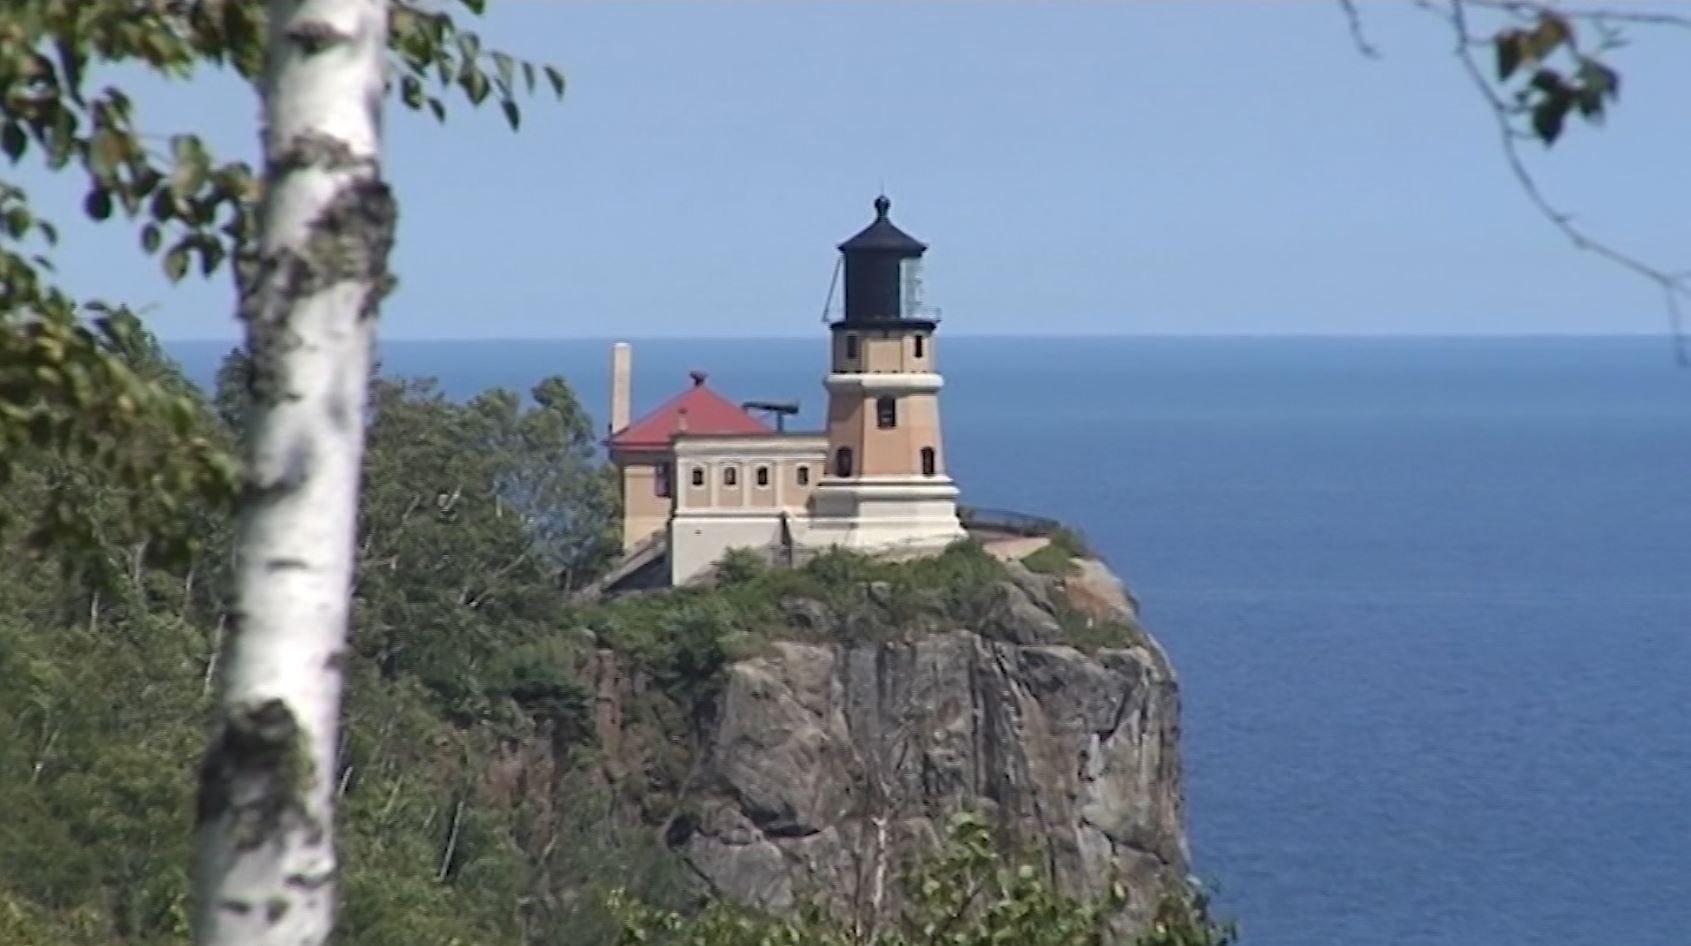 Split Rock Lighthouse from a distance